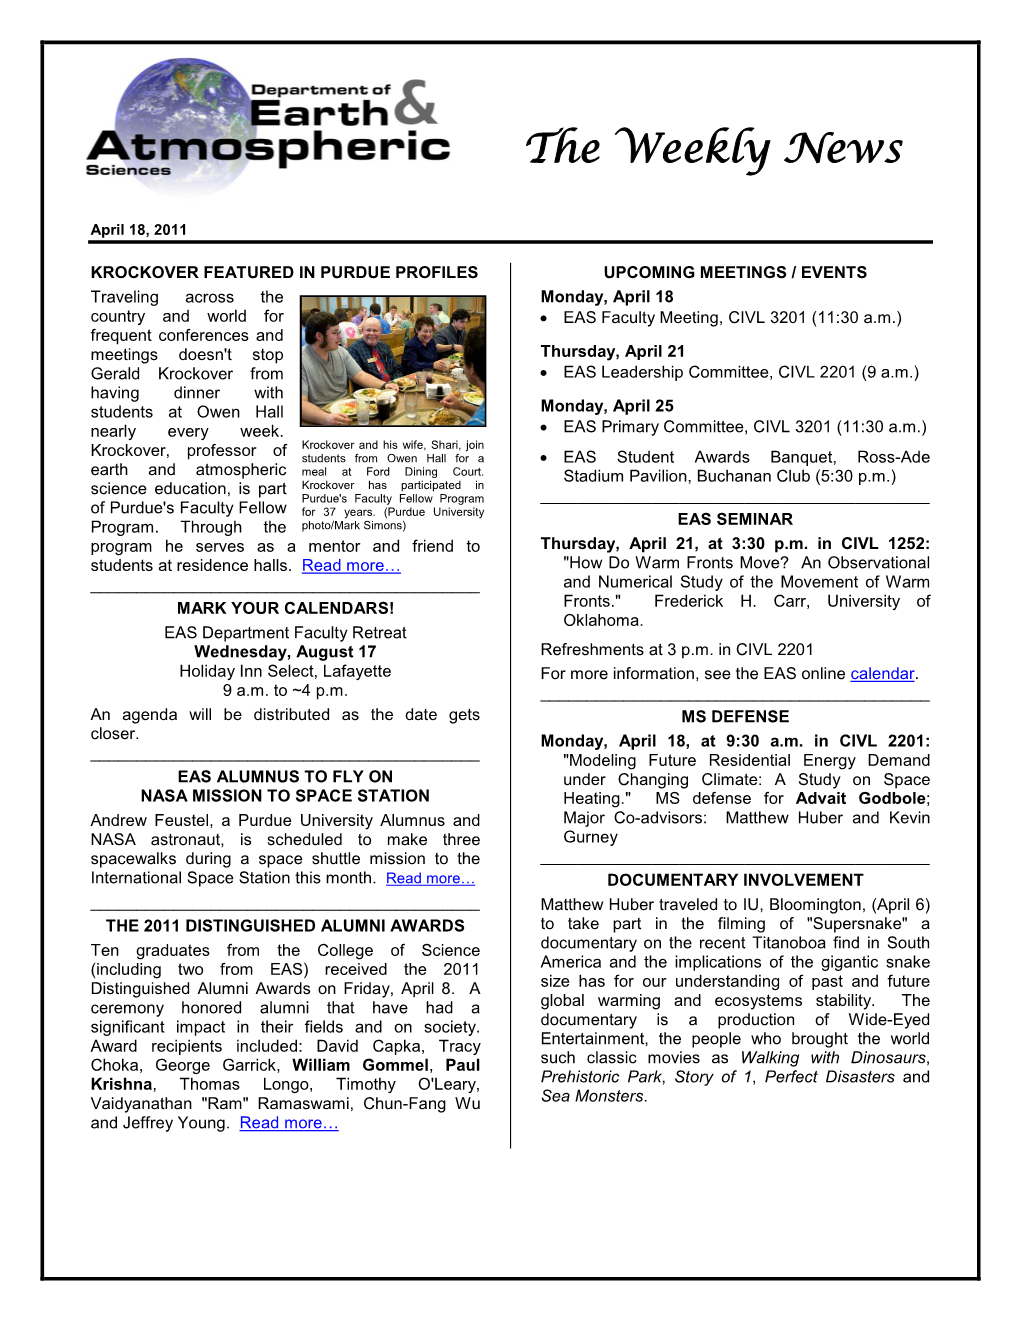 EAS Weekly News: April 18, 2011